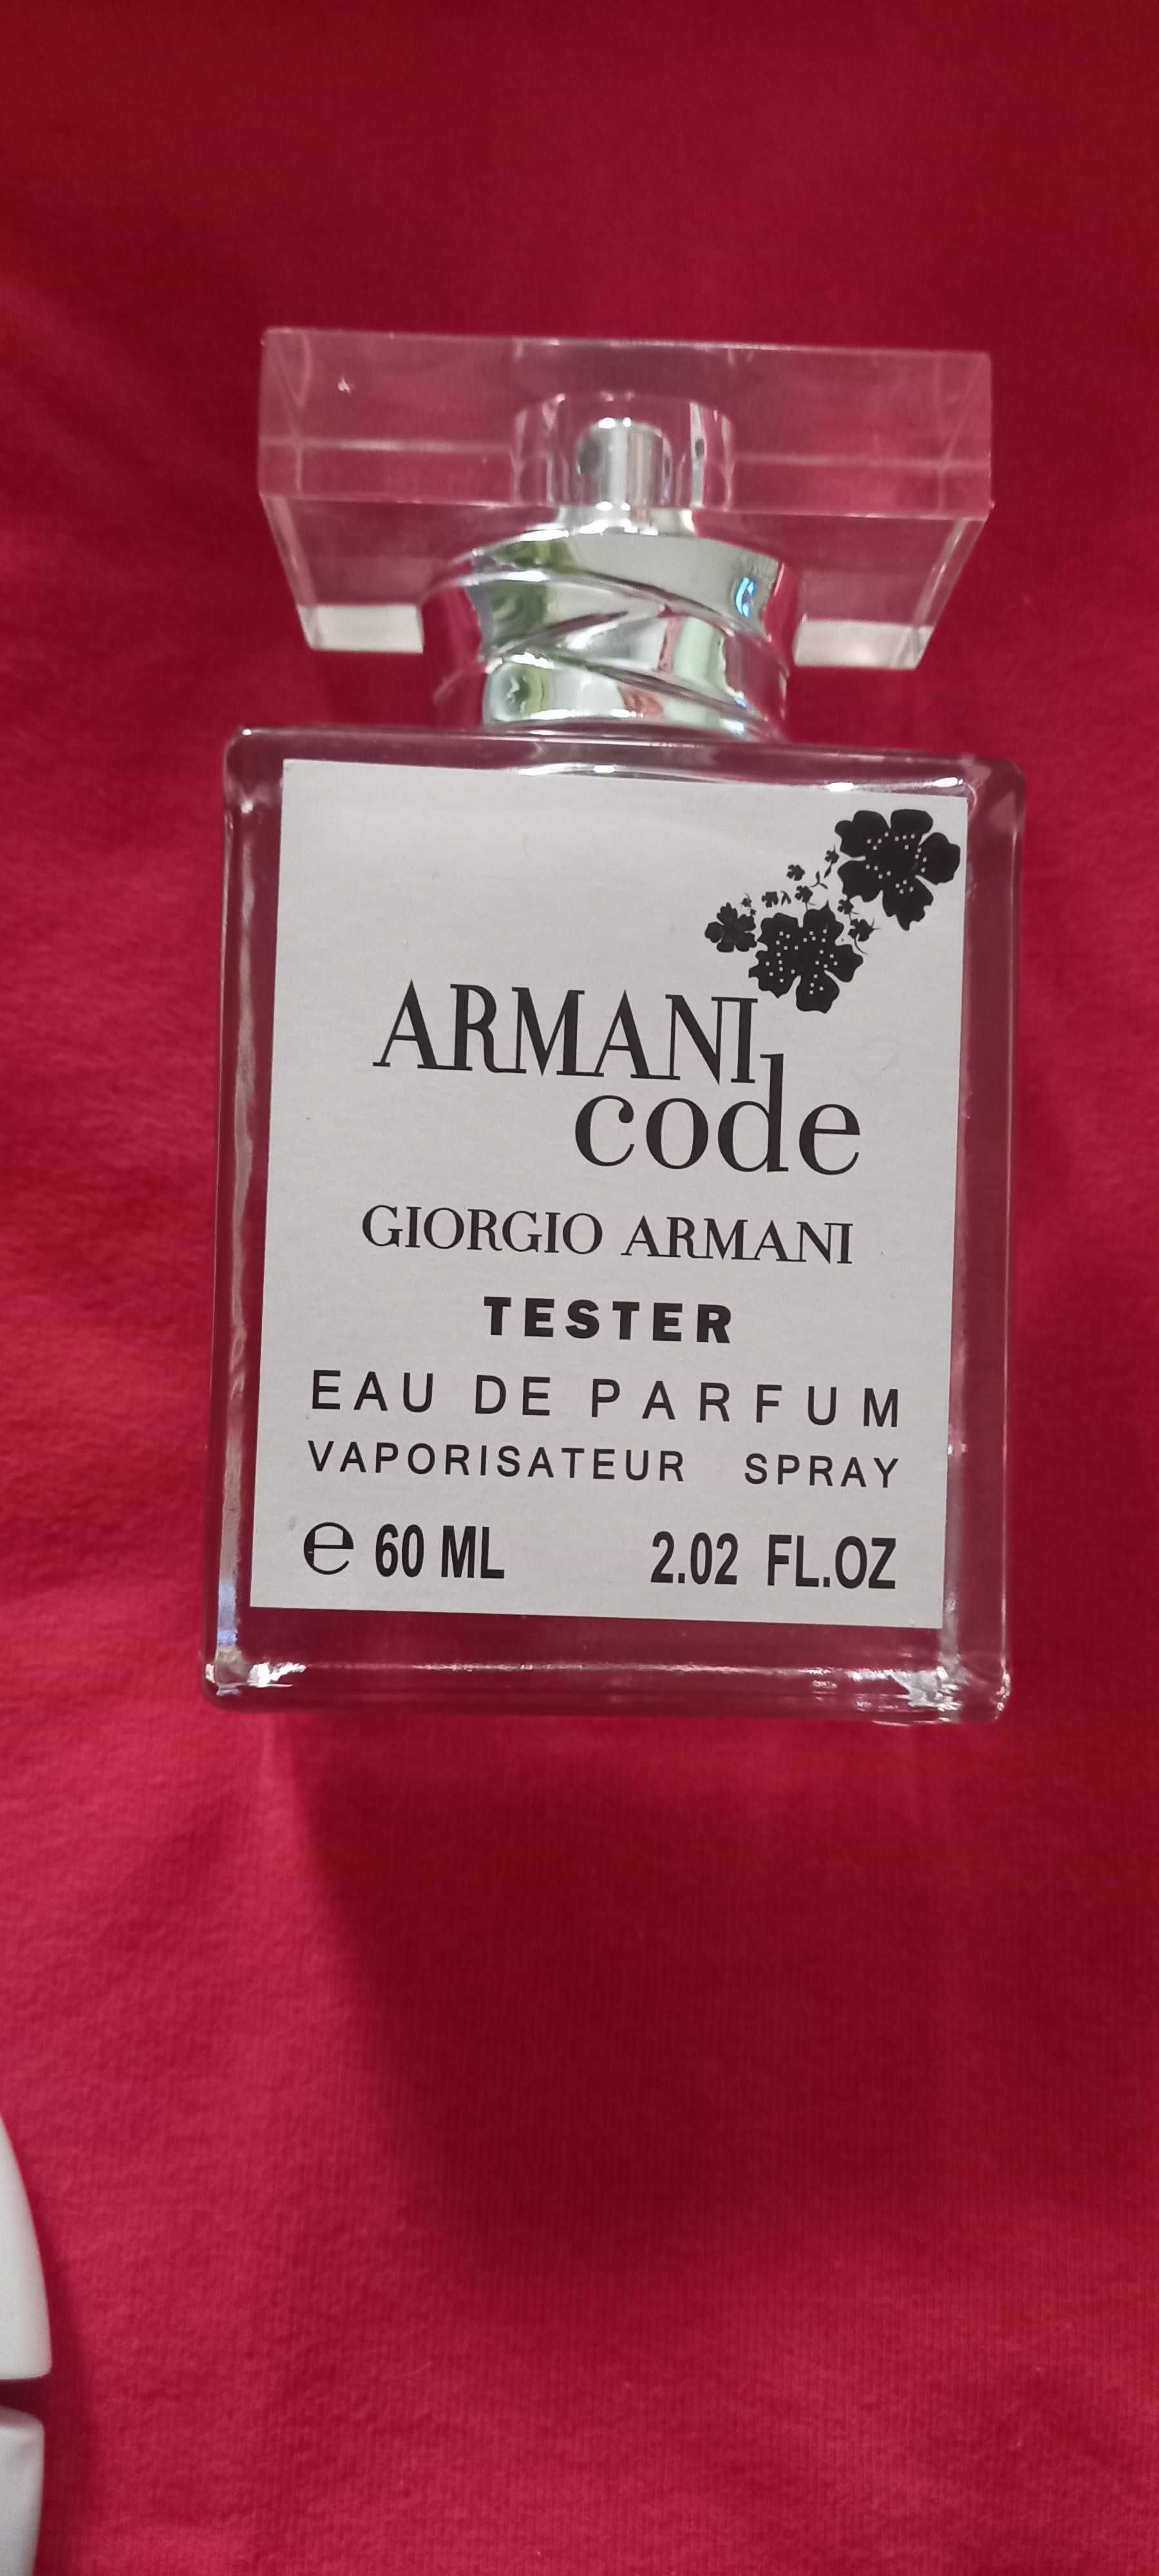 Gianfranco Ferre, Armani code, So Lovely